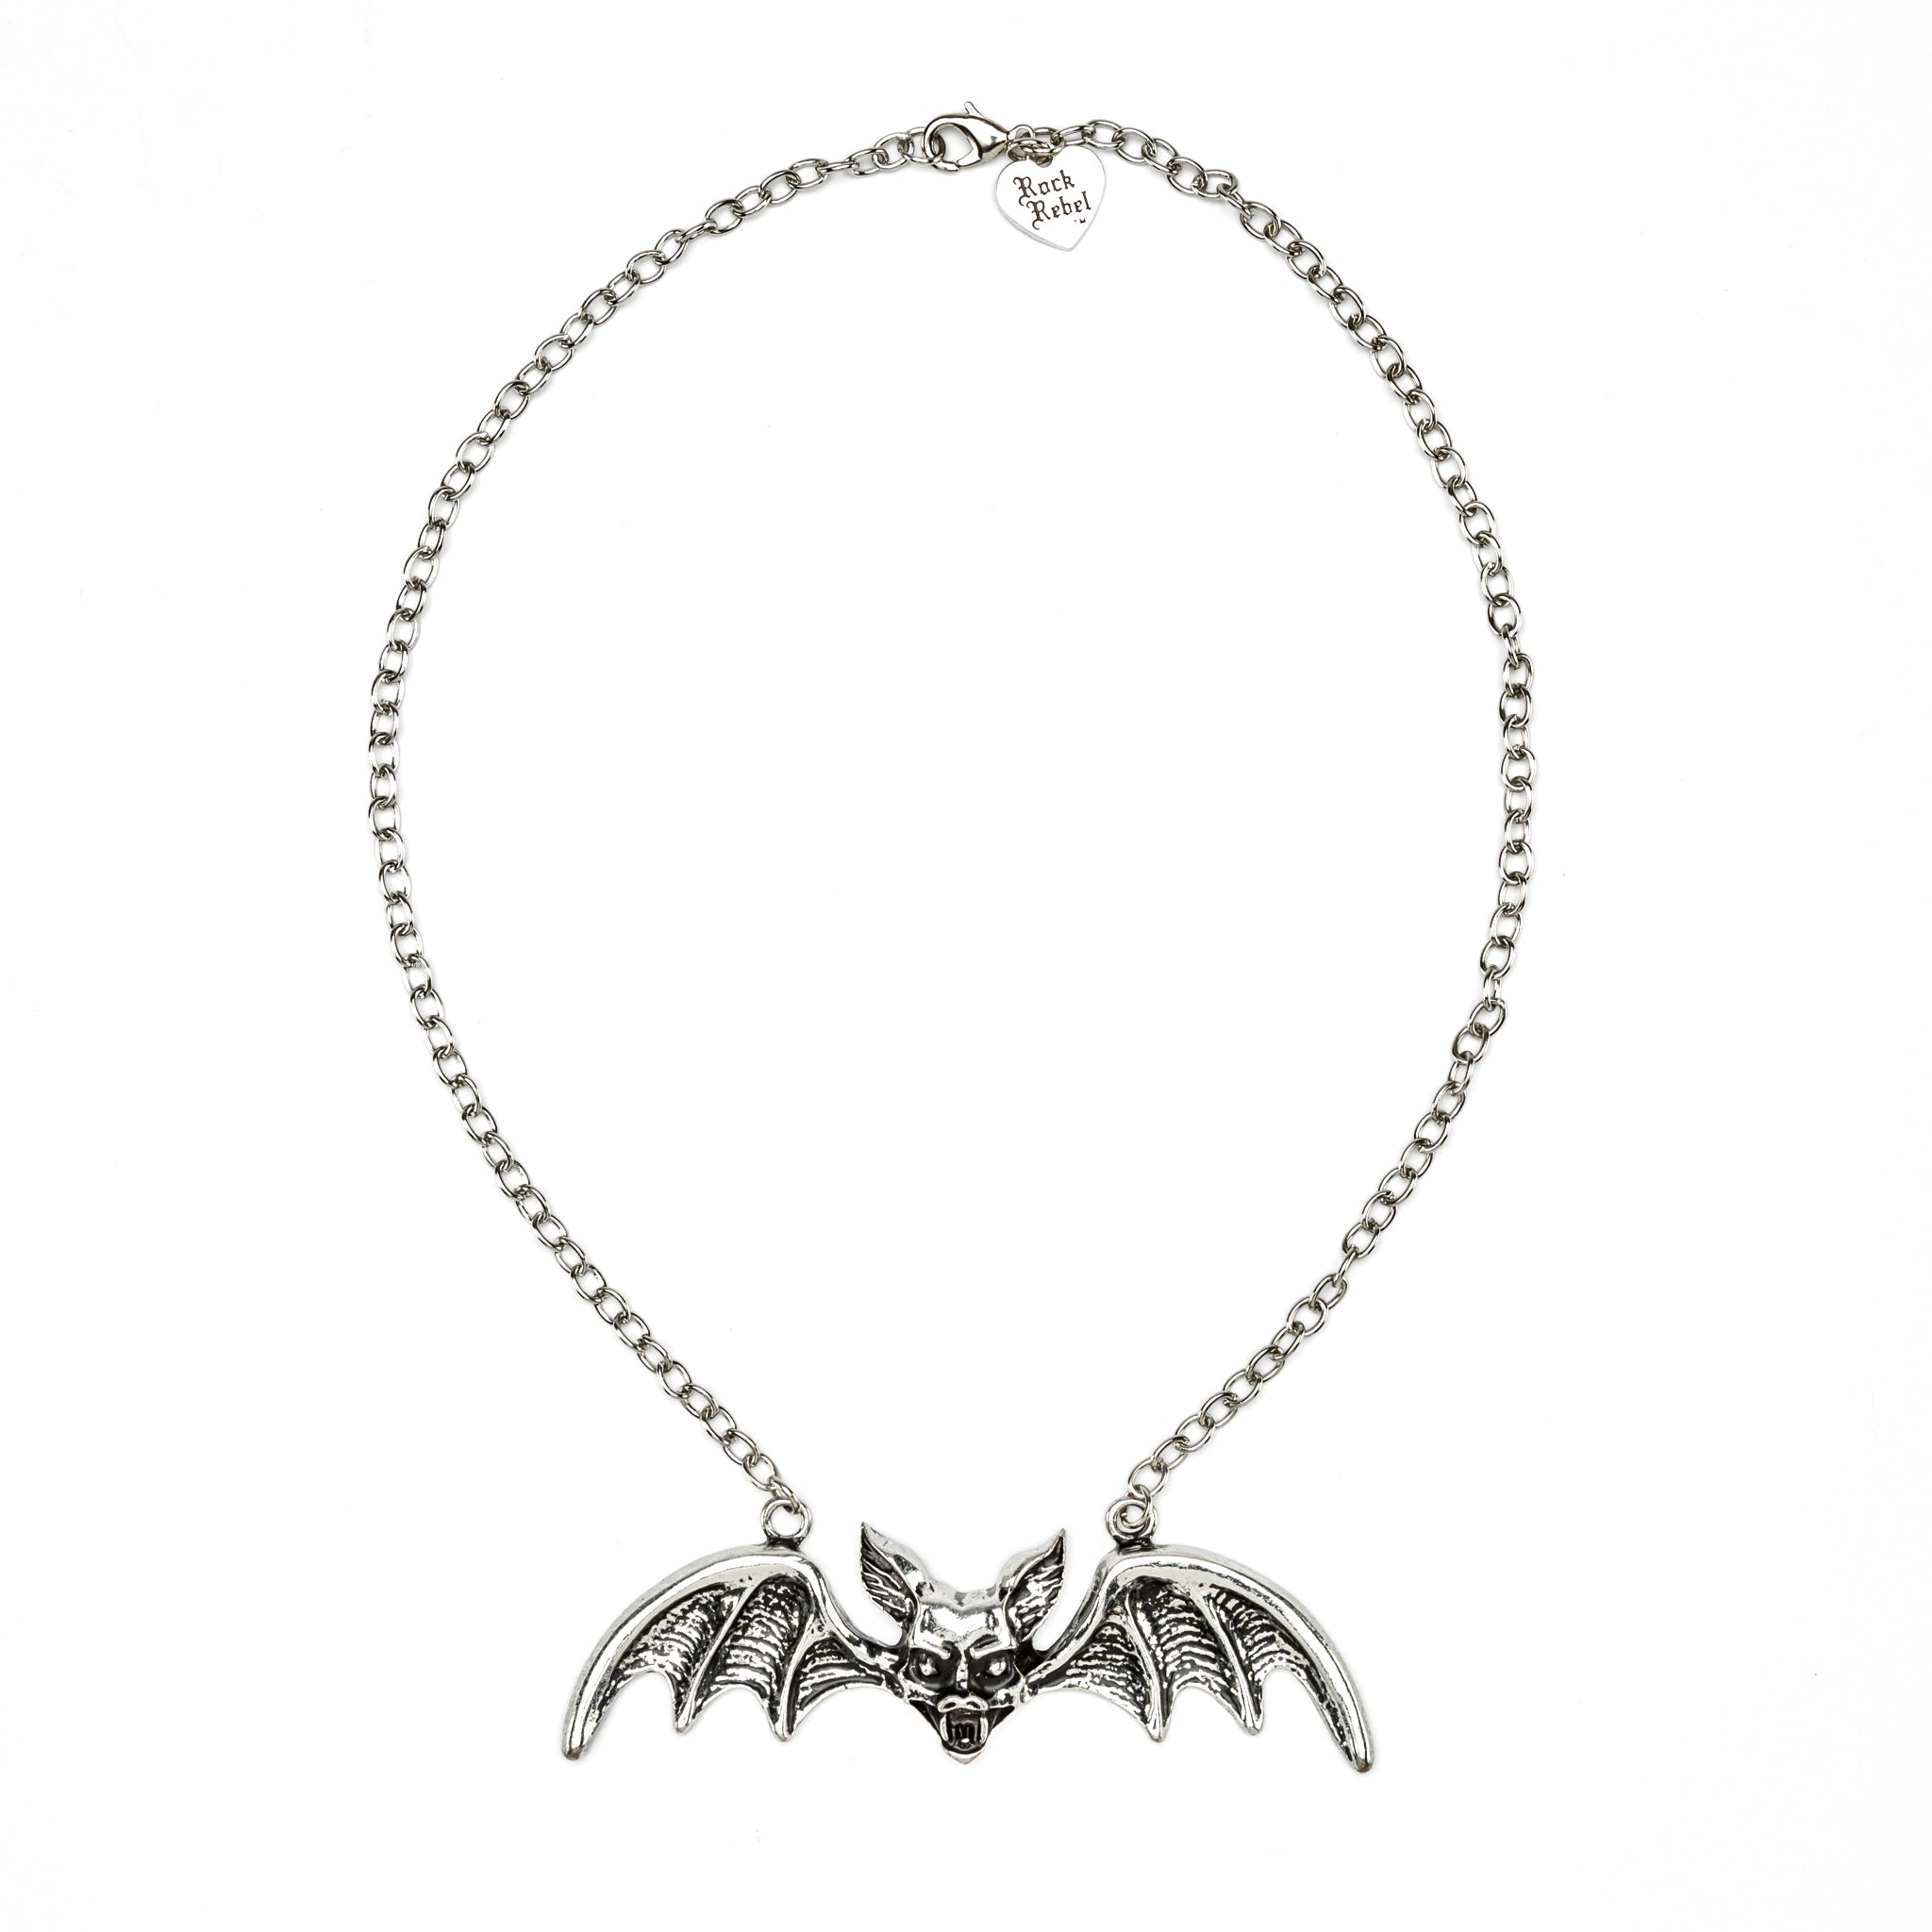 Vampire Bat Pendant Necklace - Antique Silver Plating